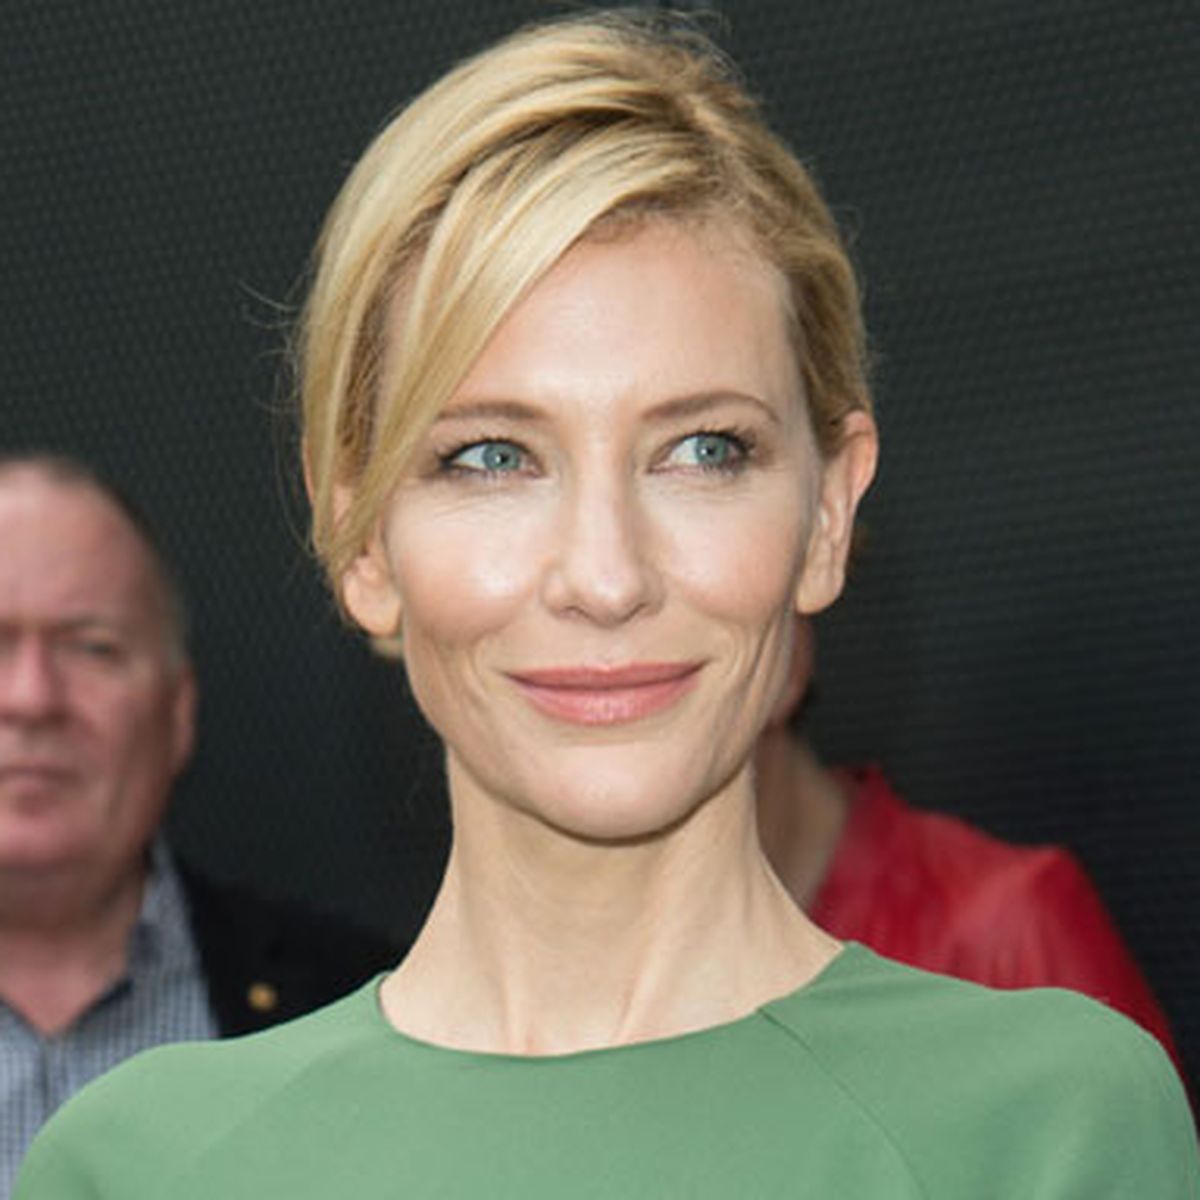 Cate Blanchett reveals she had 'many' lesbian relationships